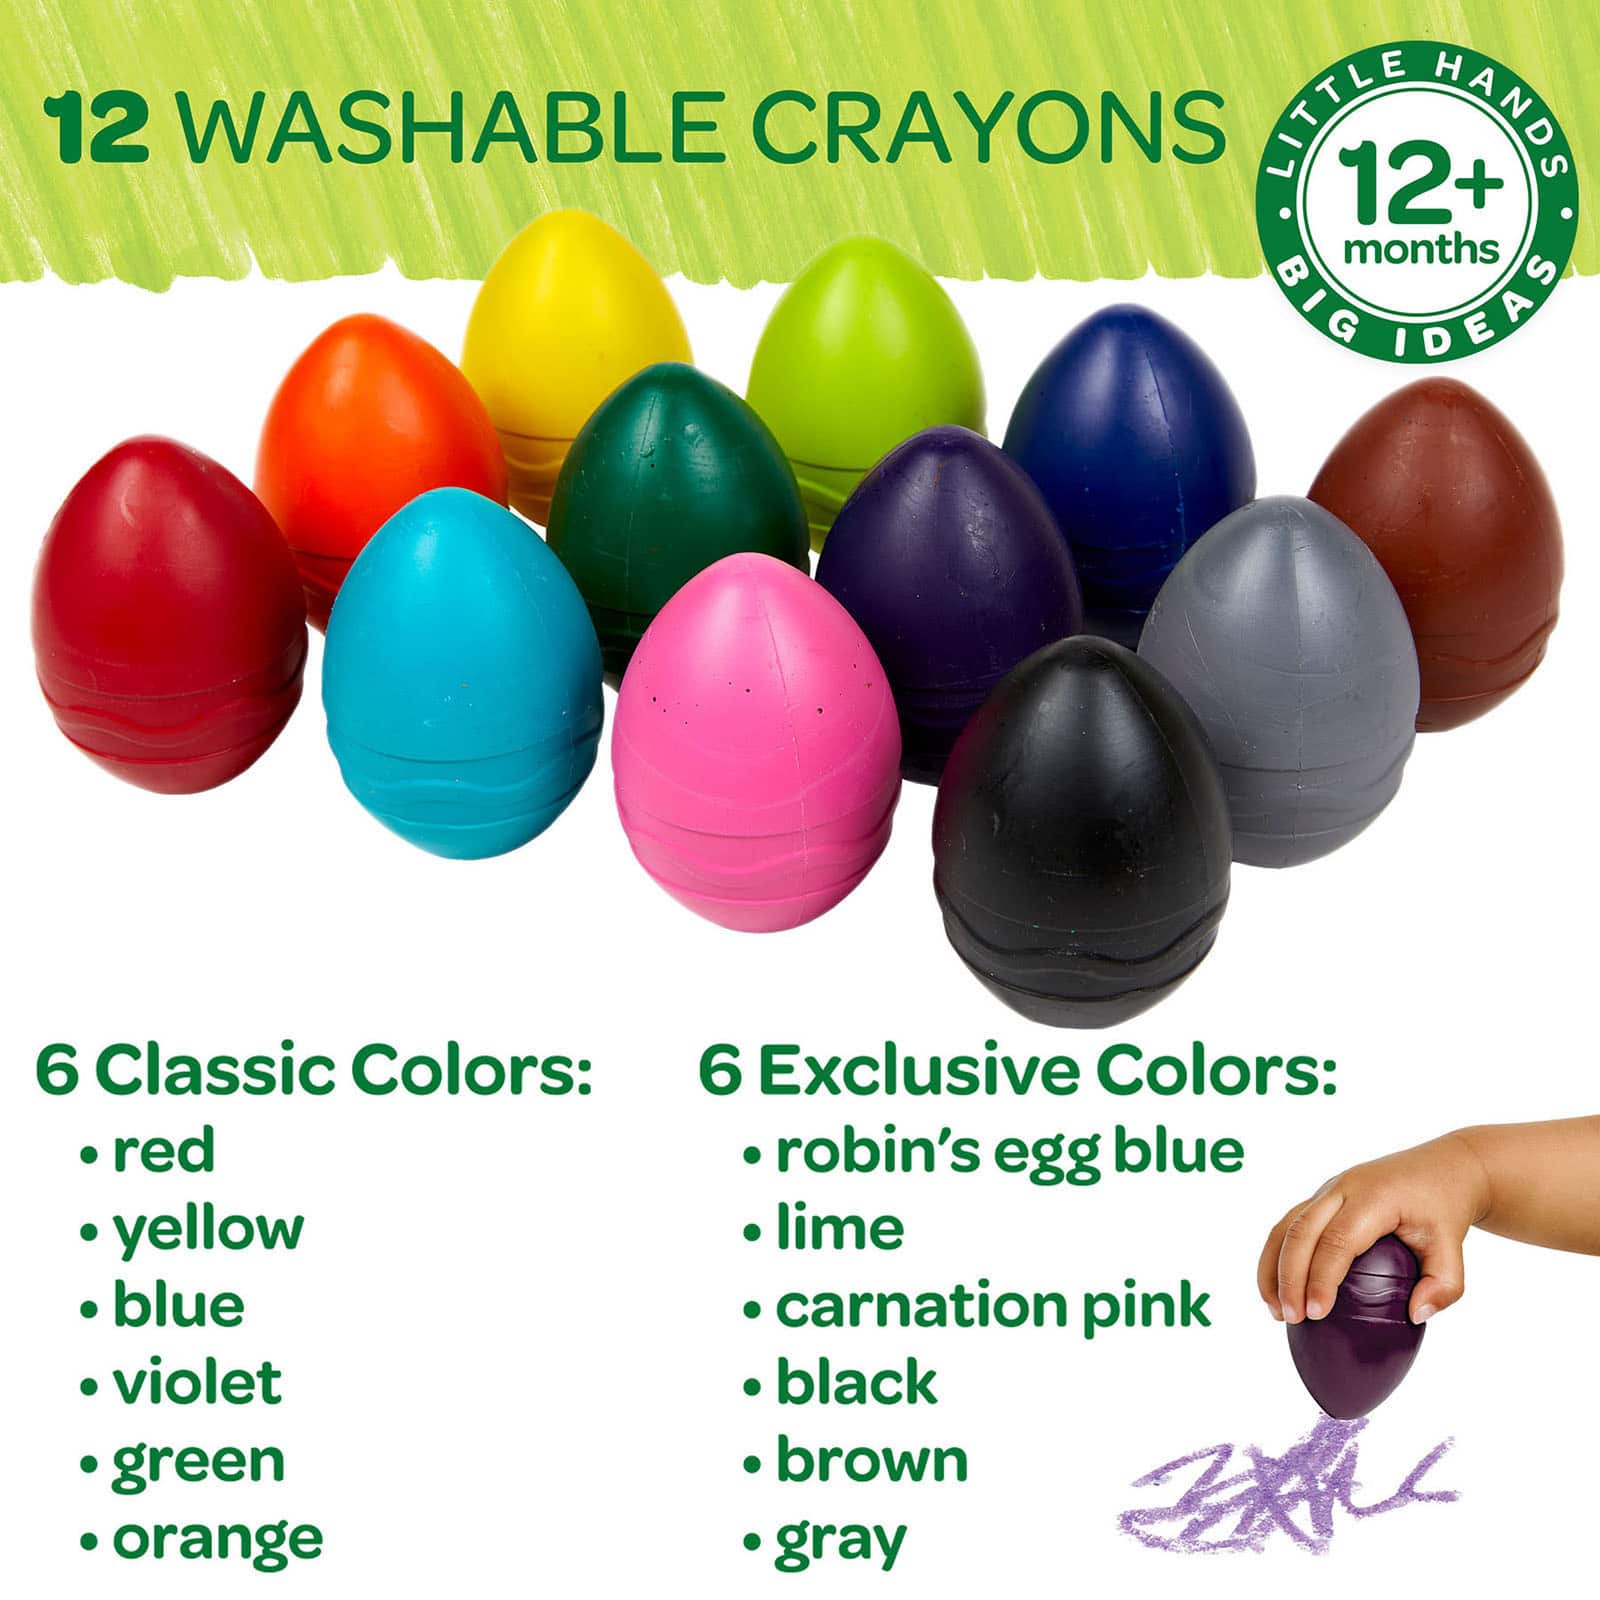 Crayola&#xAE; Washable Palm-Grasp Crayons, 12ct.